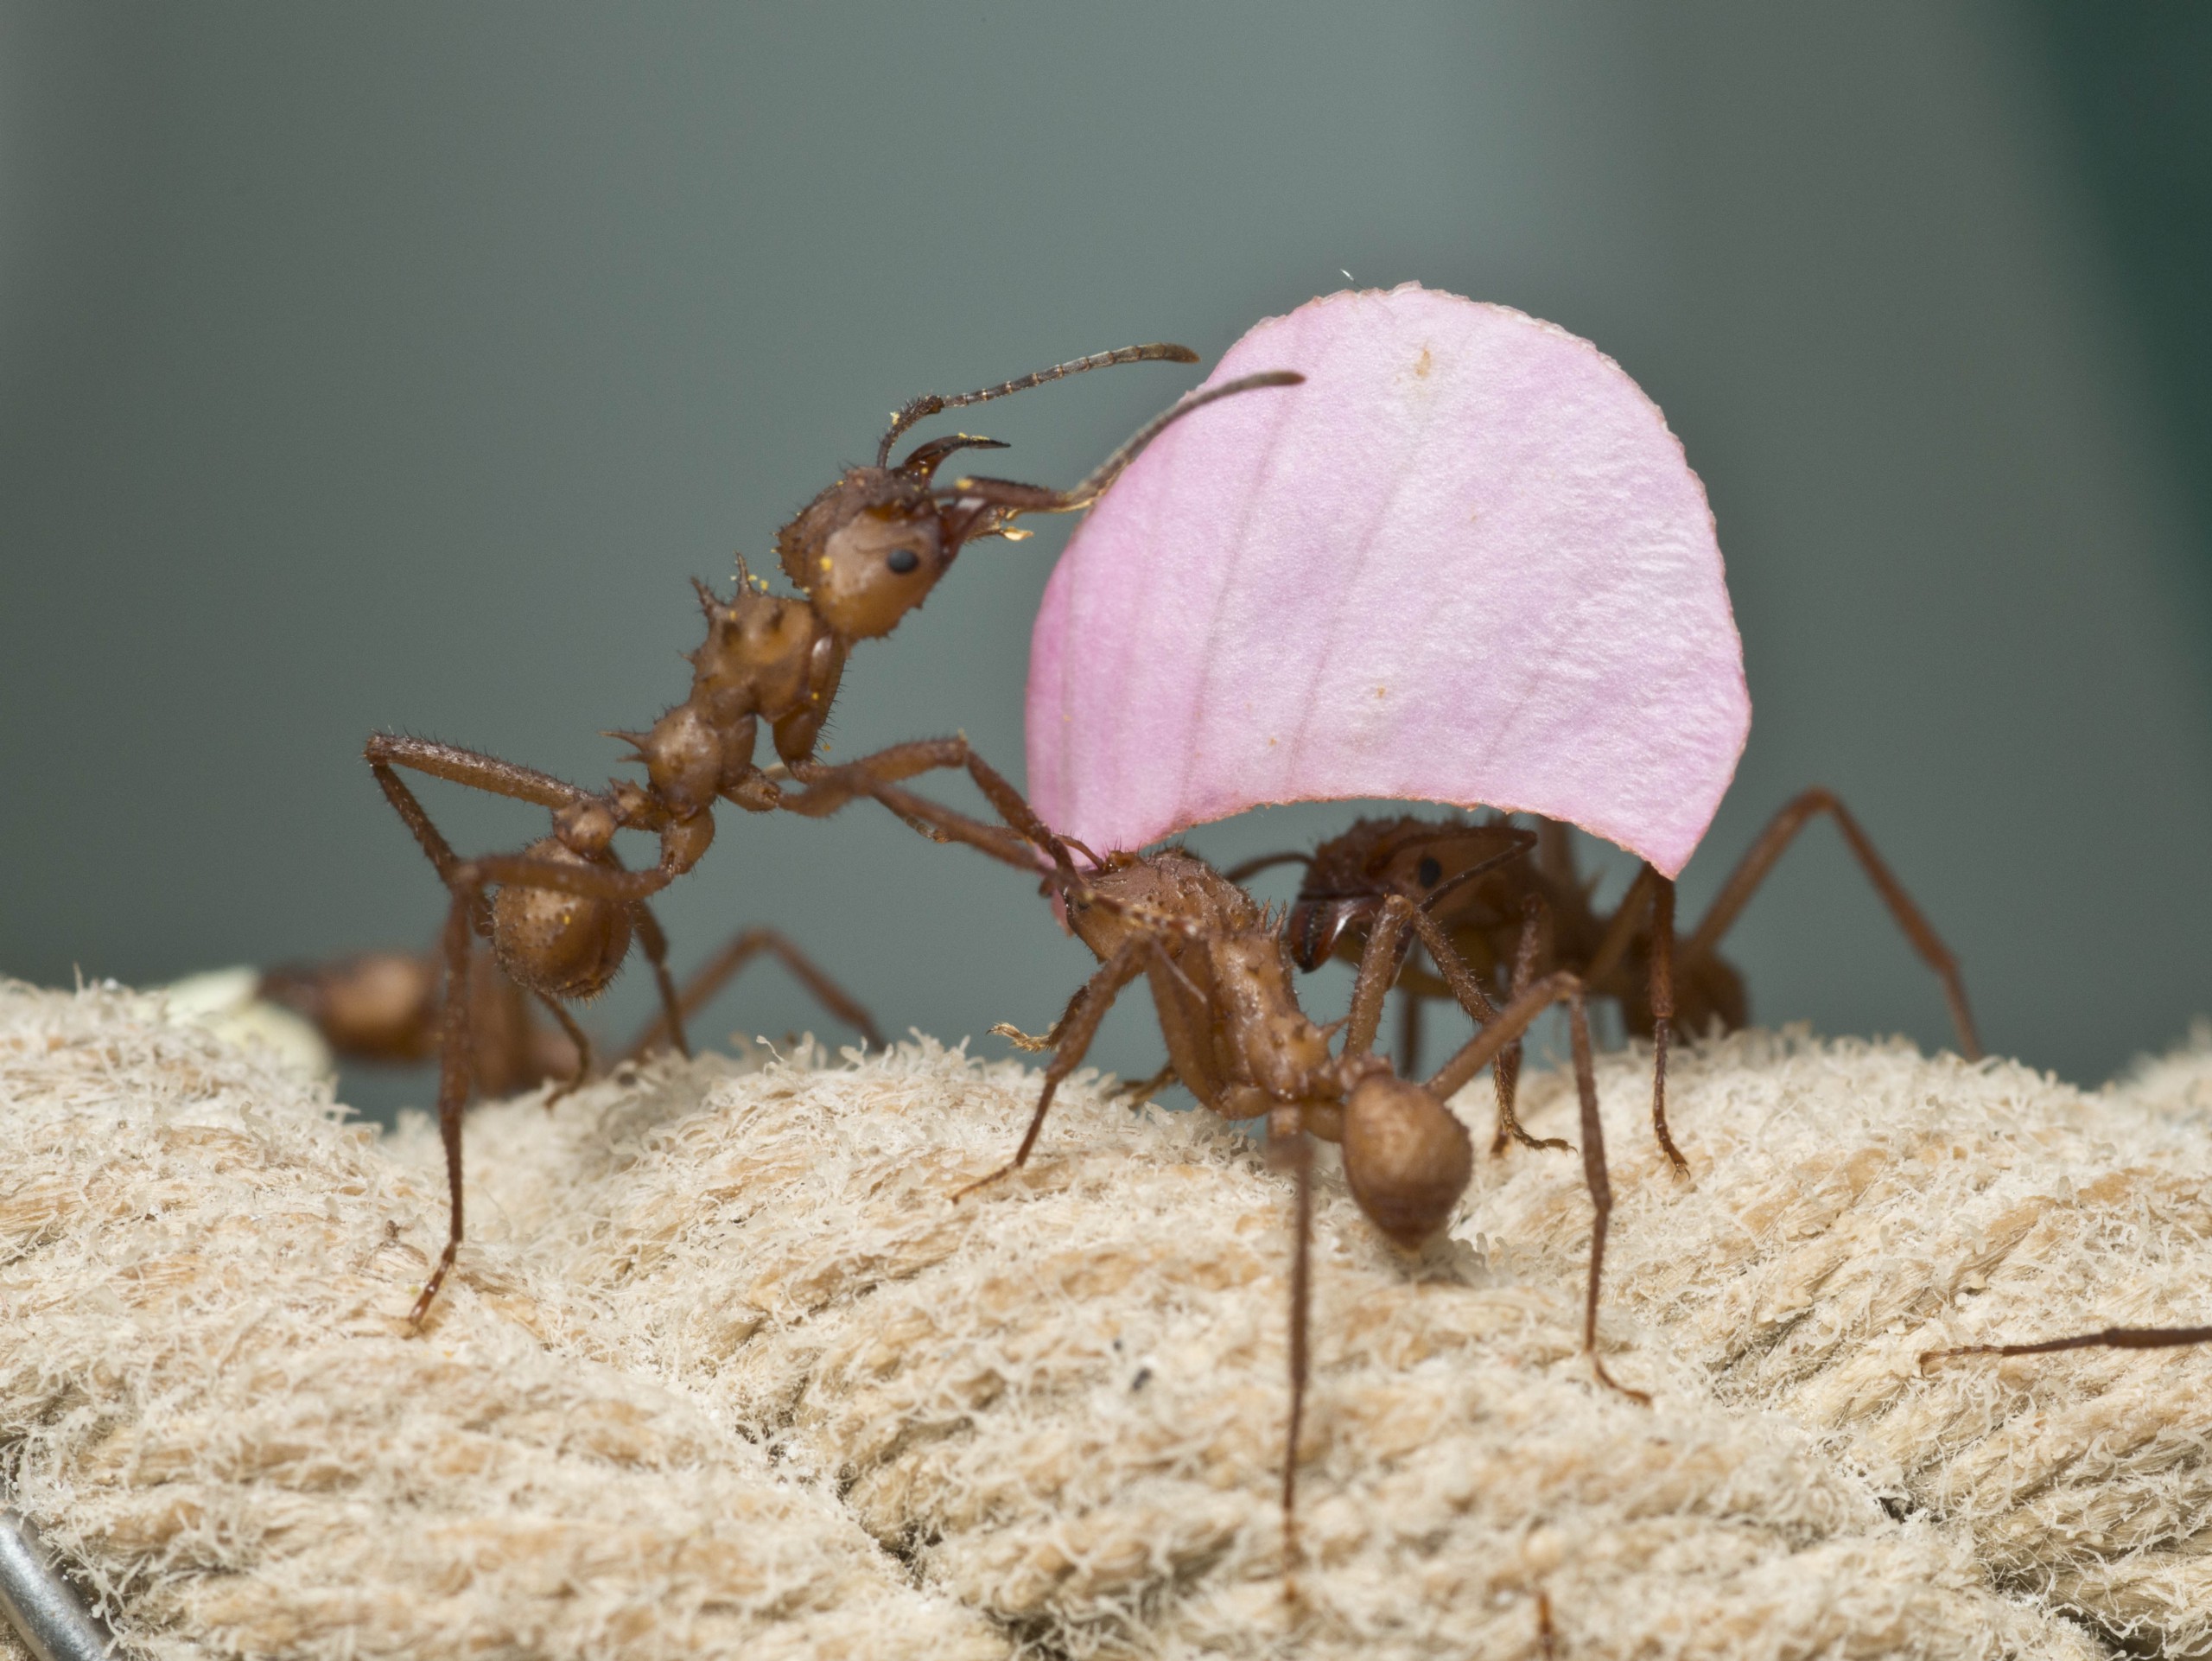 Three ants carry a flower petal.